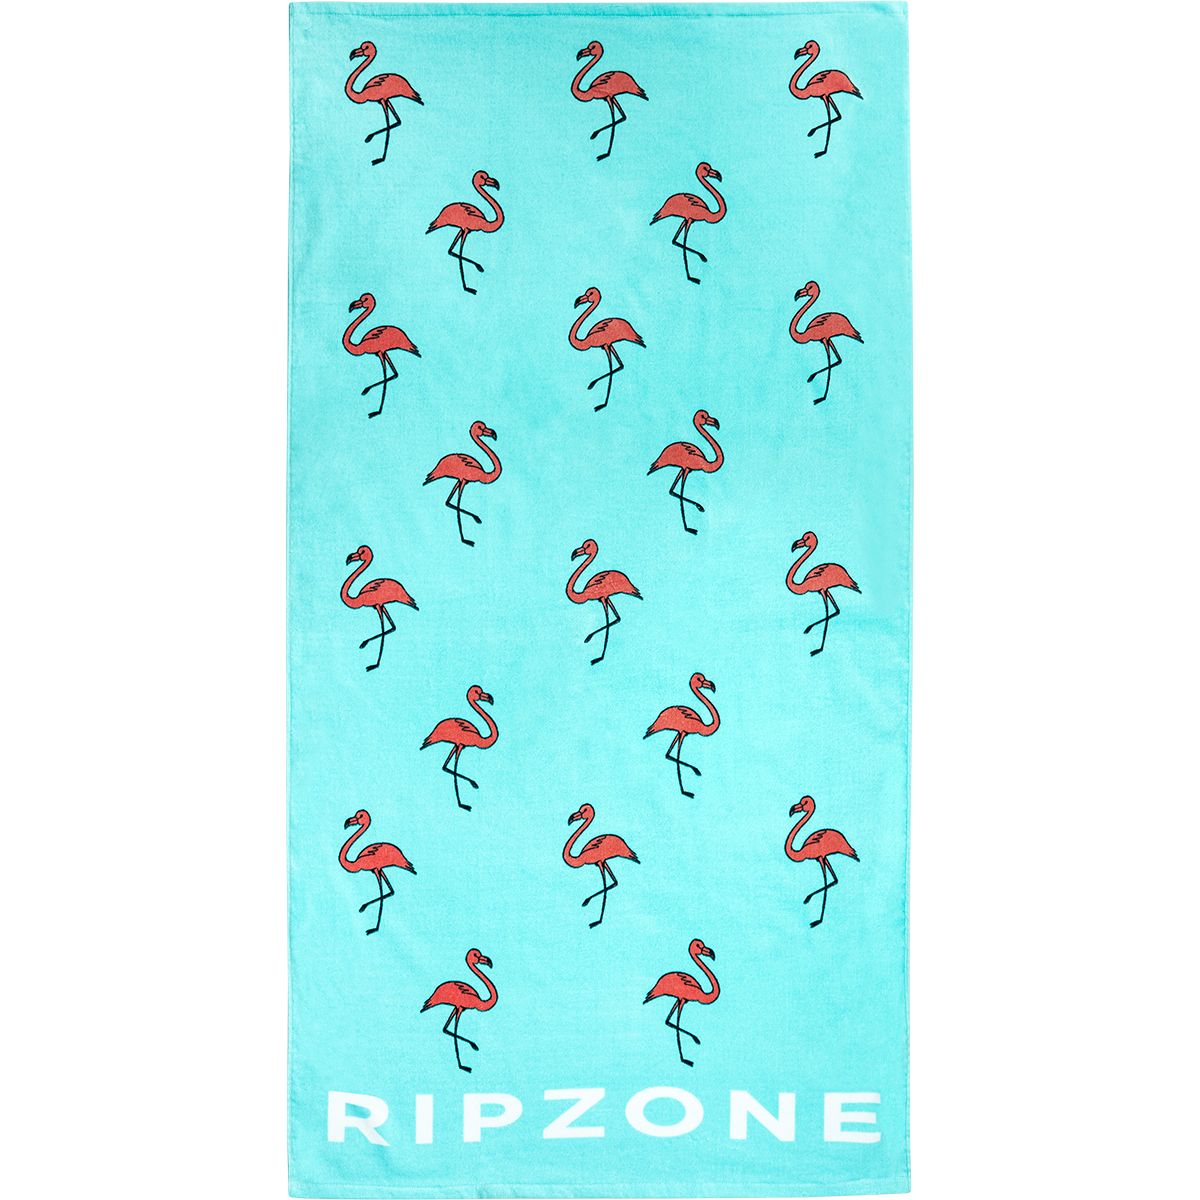 Ripzone Men's Luxury Beach Towel